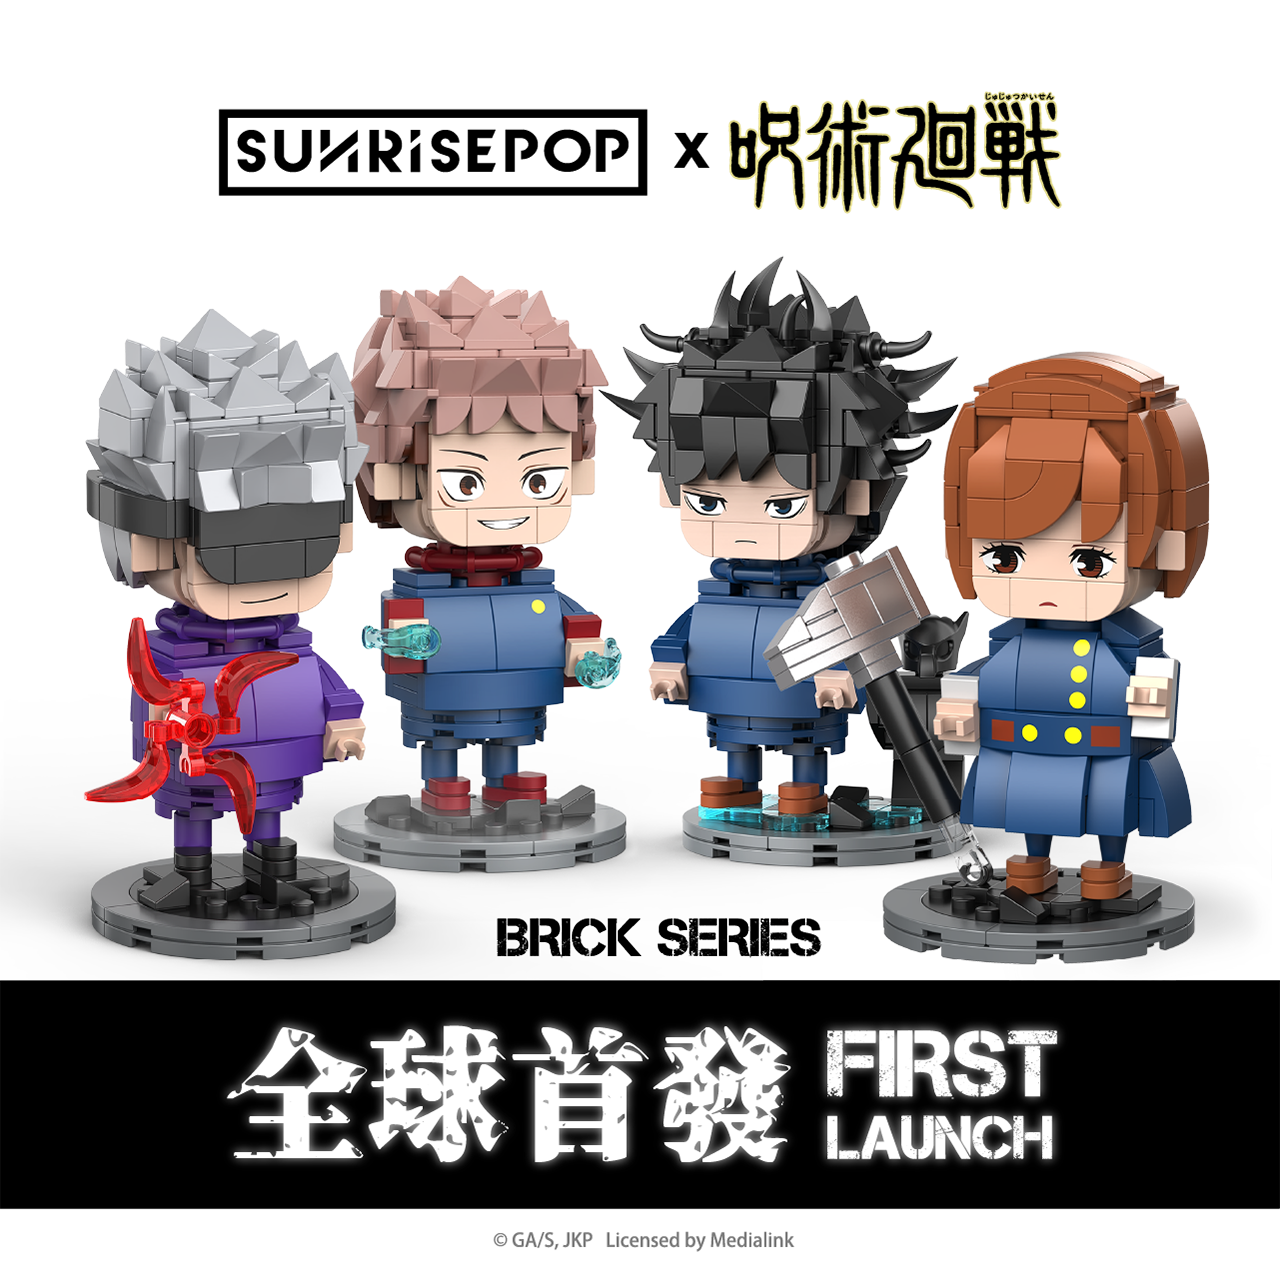 Jujutsu Kaisen Brick Series First Launch | Sunrisepop